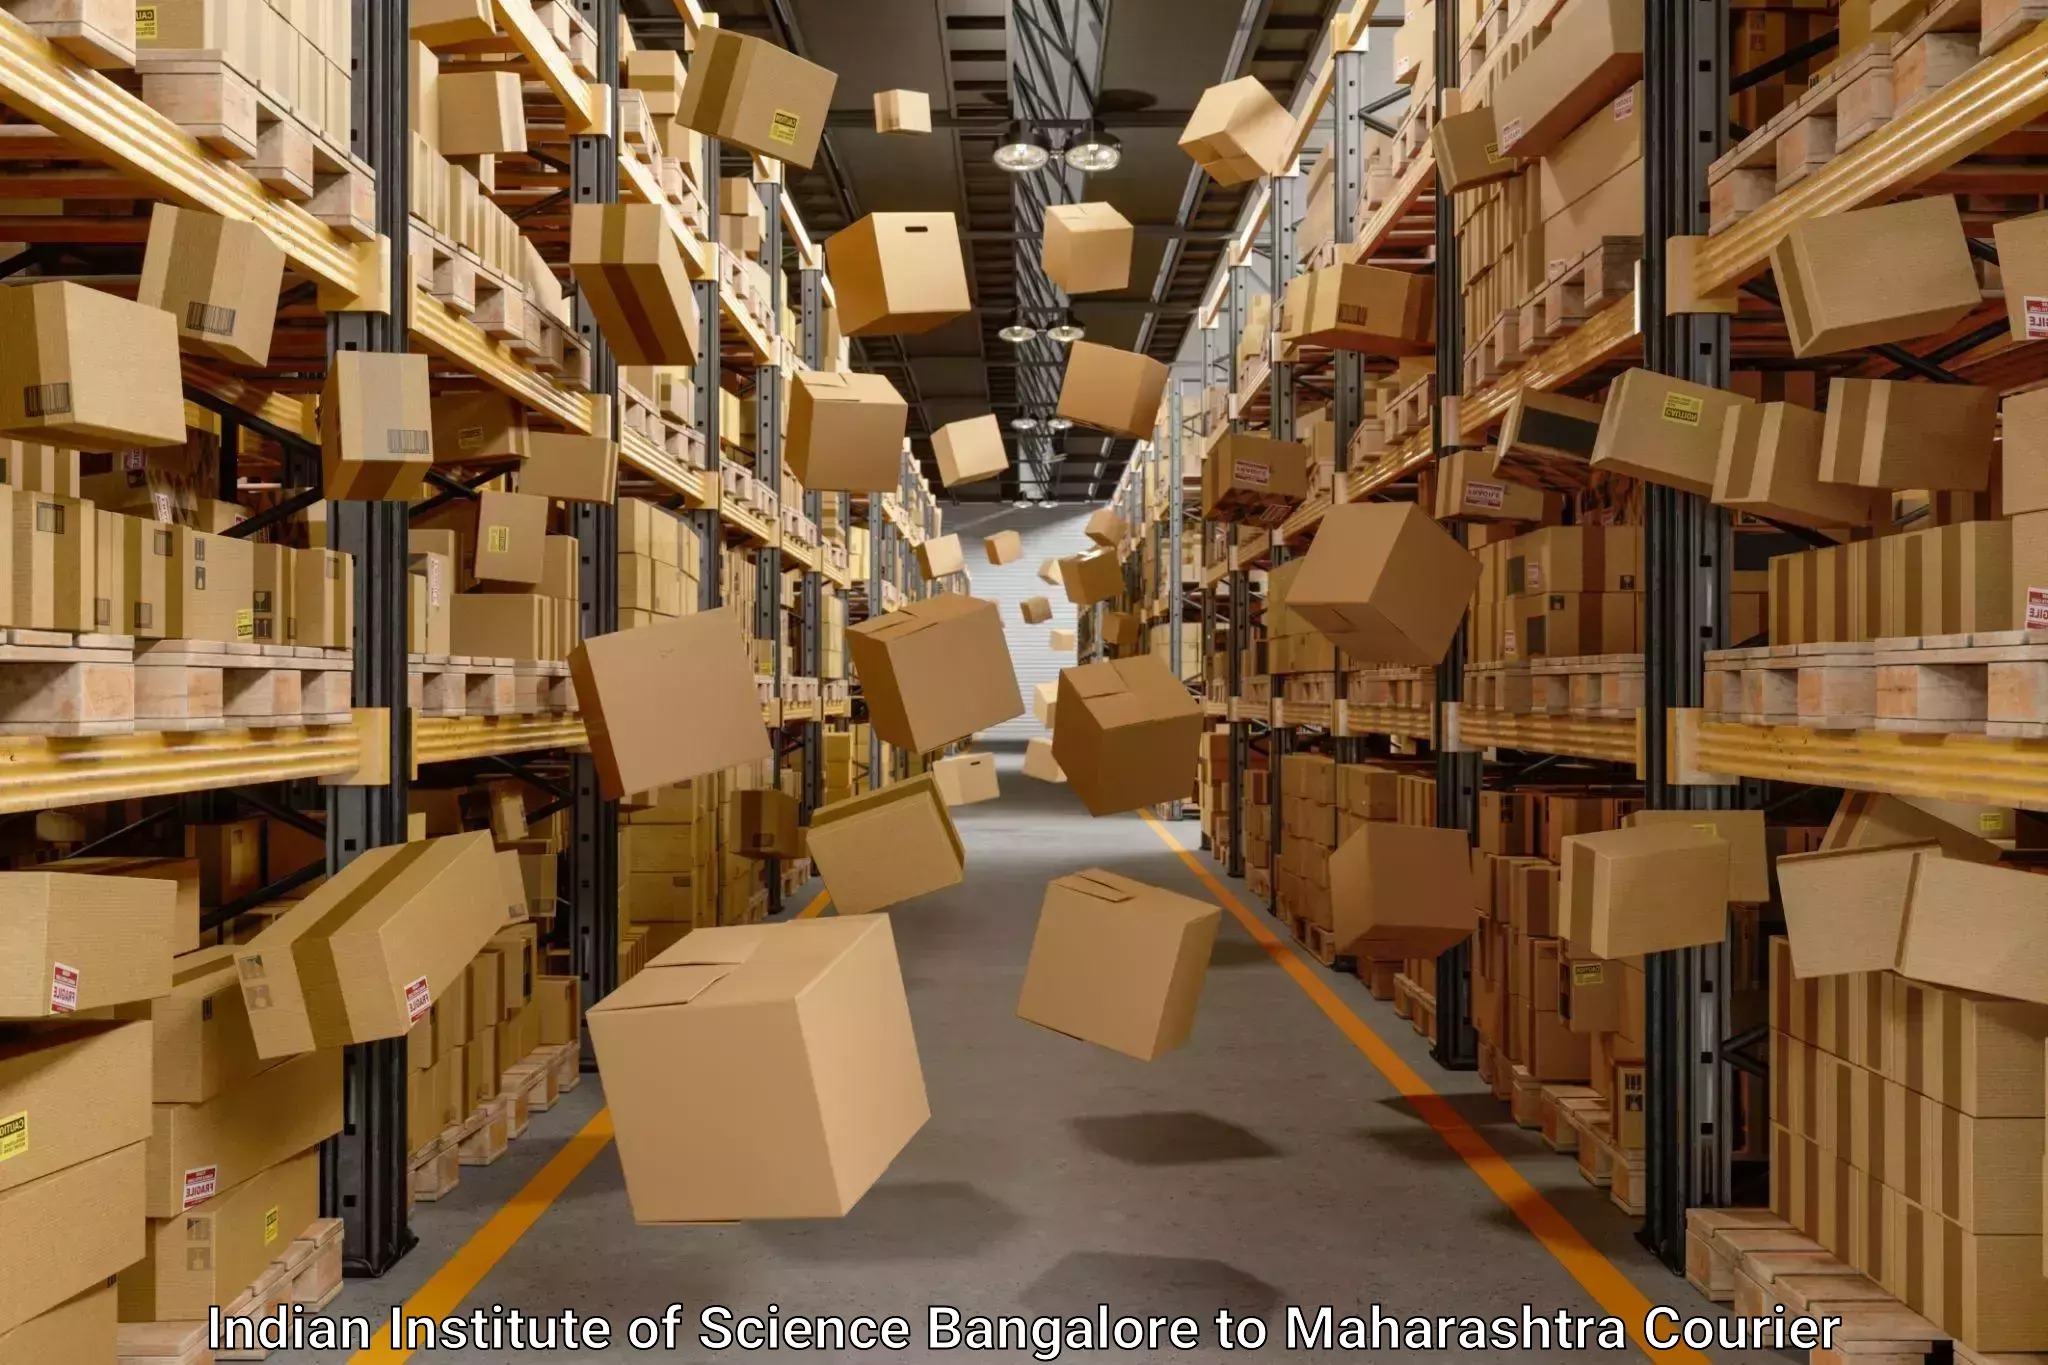 Professional moving company Indian Institute of Science Bangalore to Maharashtra